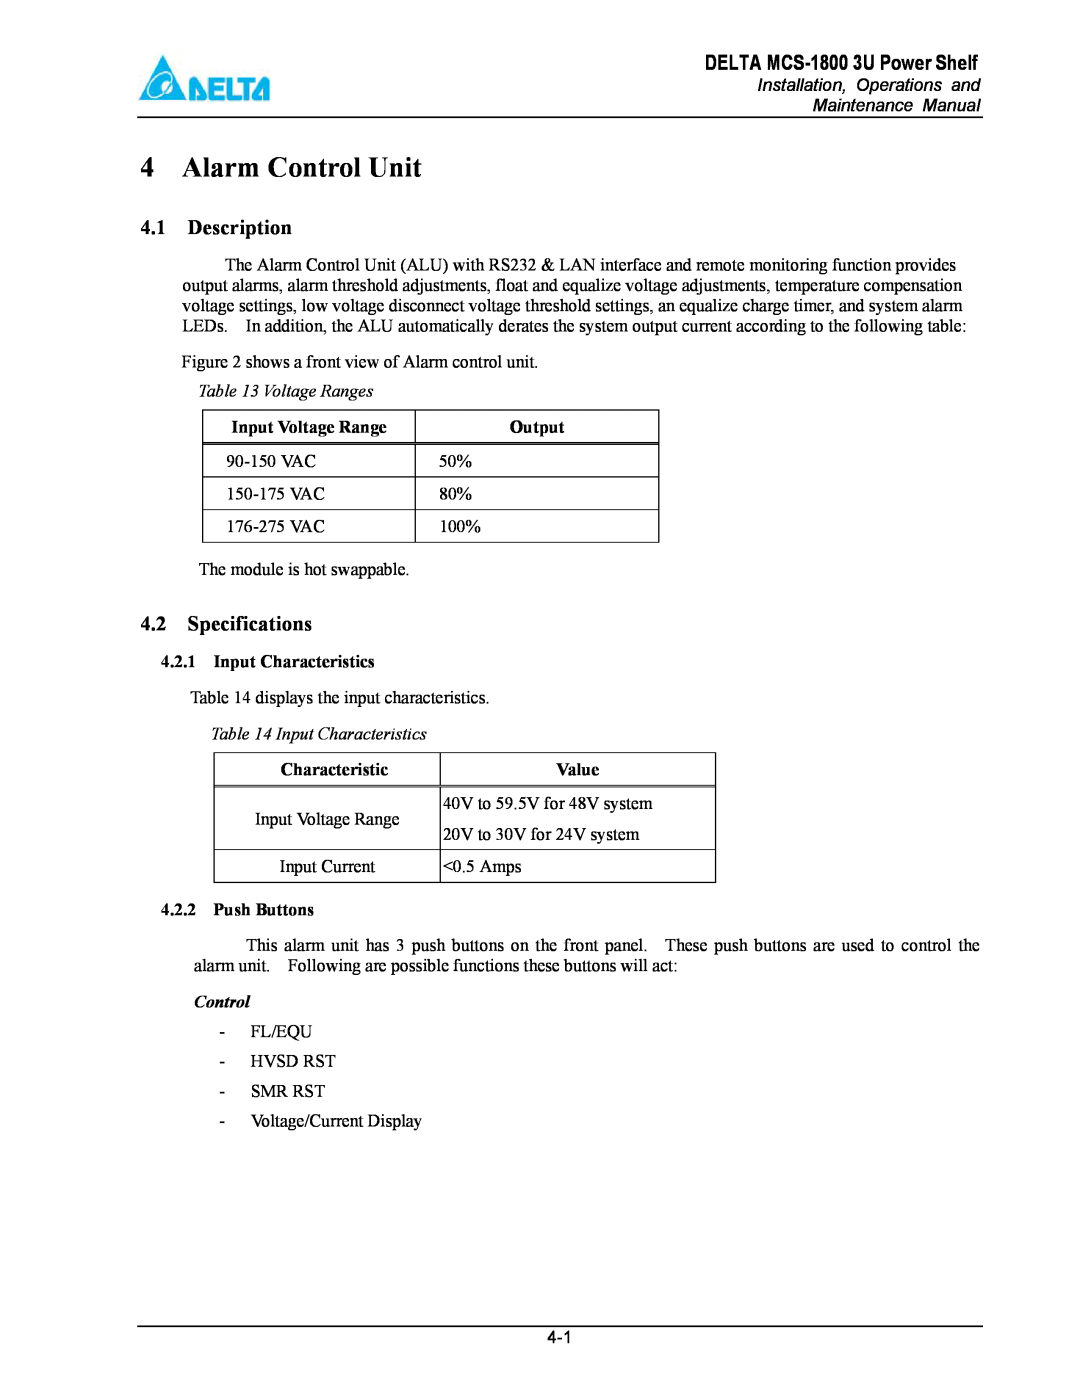 Delta manual Alarm Control Unit, DELTA MCS-1800 3U Power Shelf, Description, Specifications, Voltage Ranges 